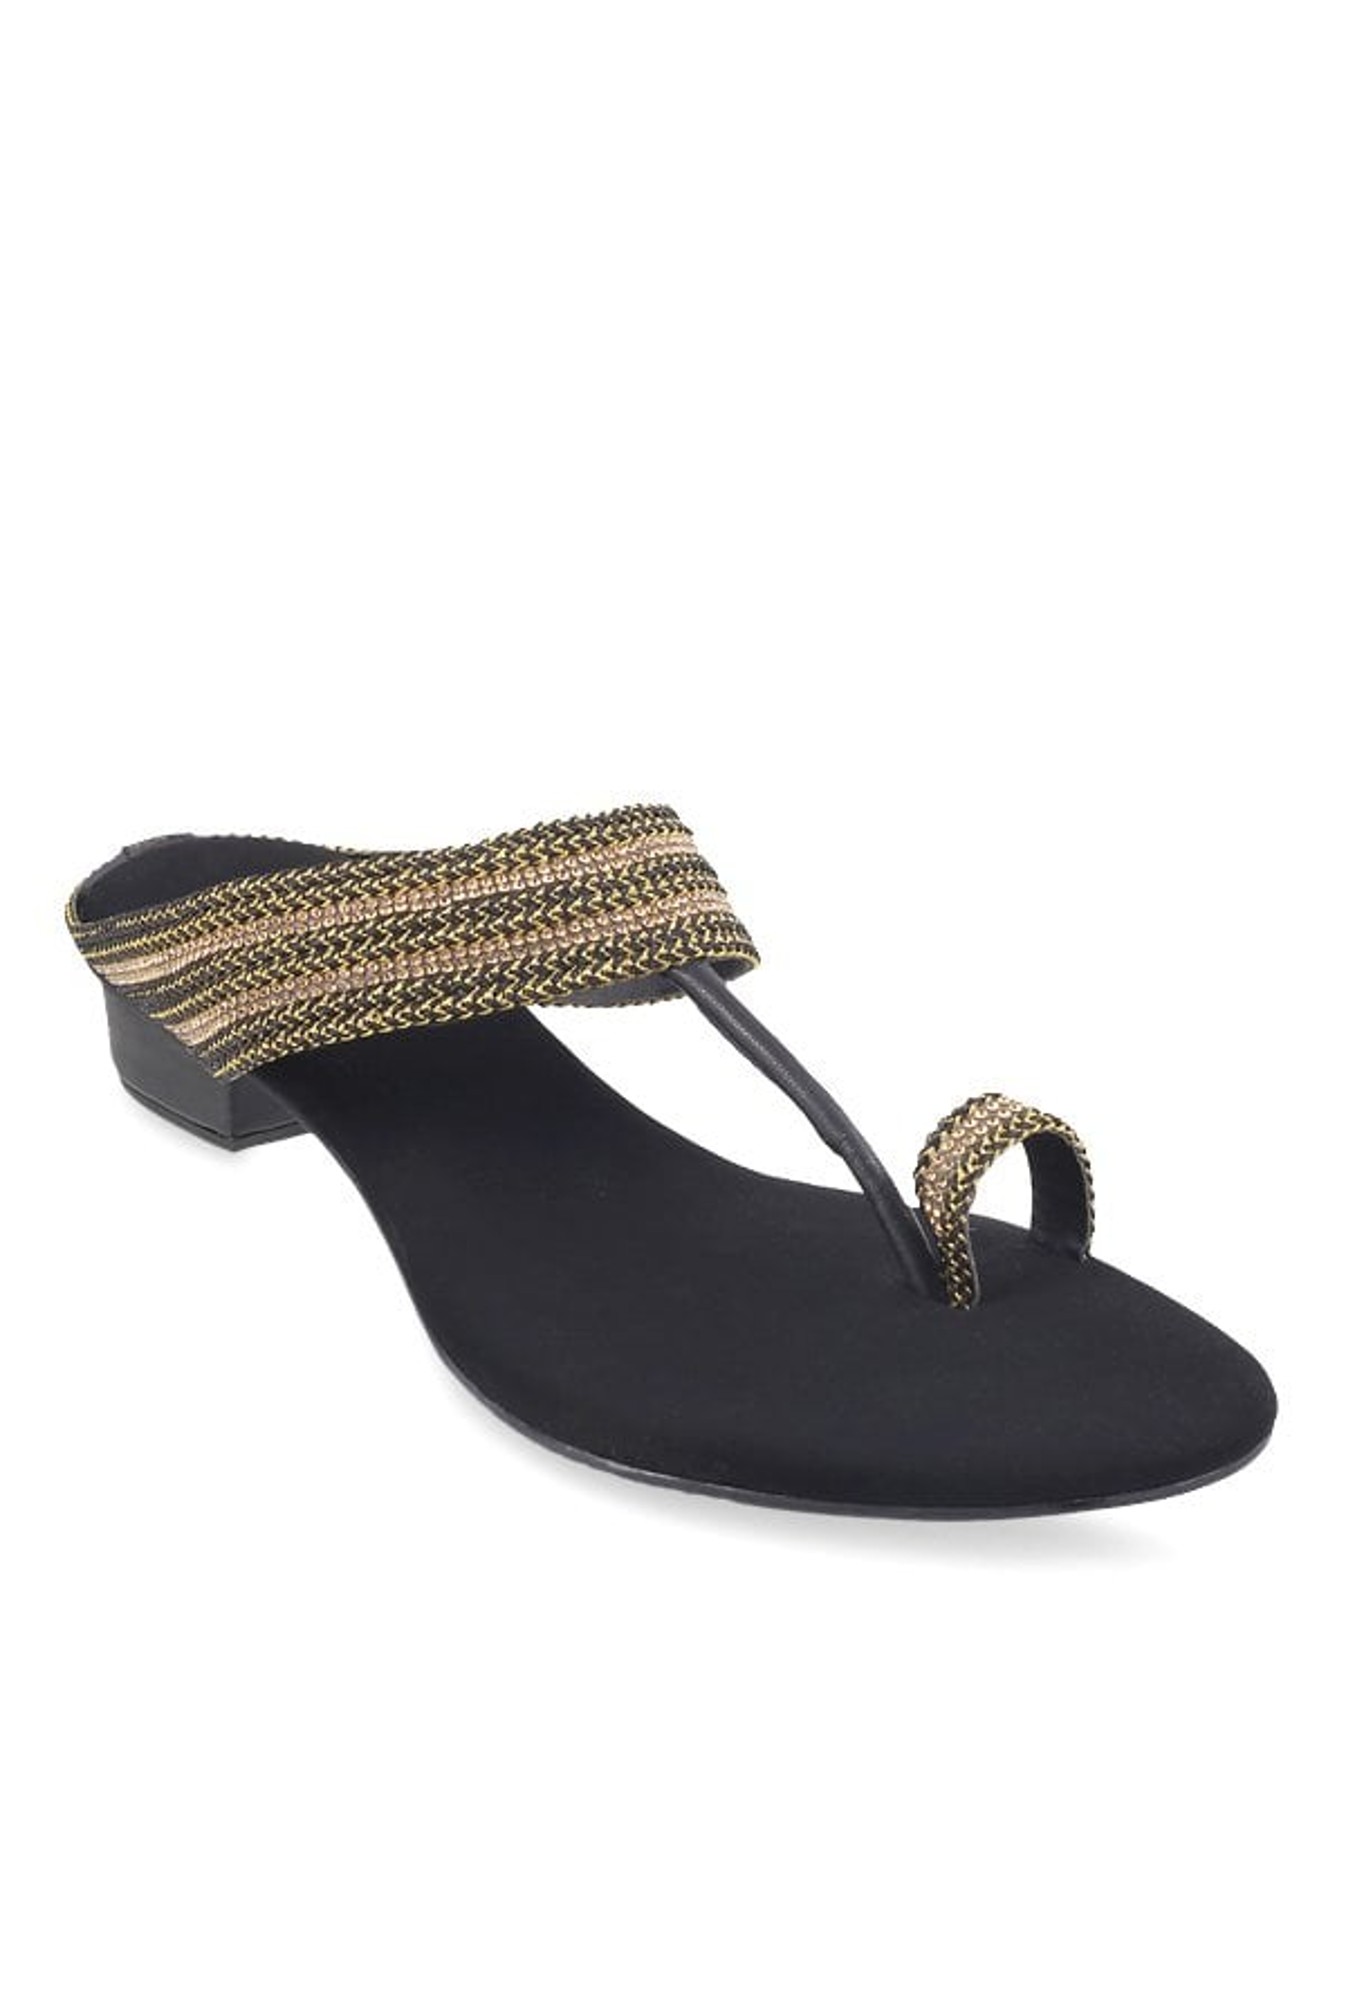 Buy Mochi Women Black Casual Sandals Online | SKU: 33-1446-11-36 – Mochi  Shoes-sgquangbinhtourist.com.vn